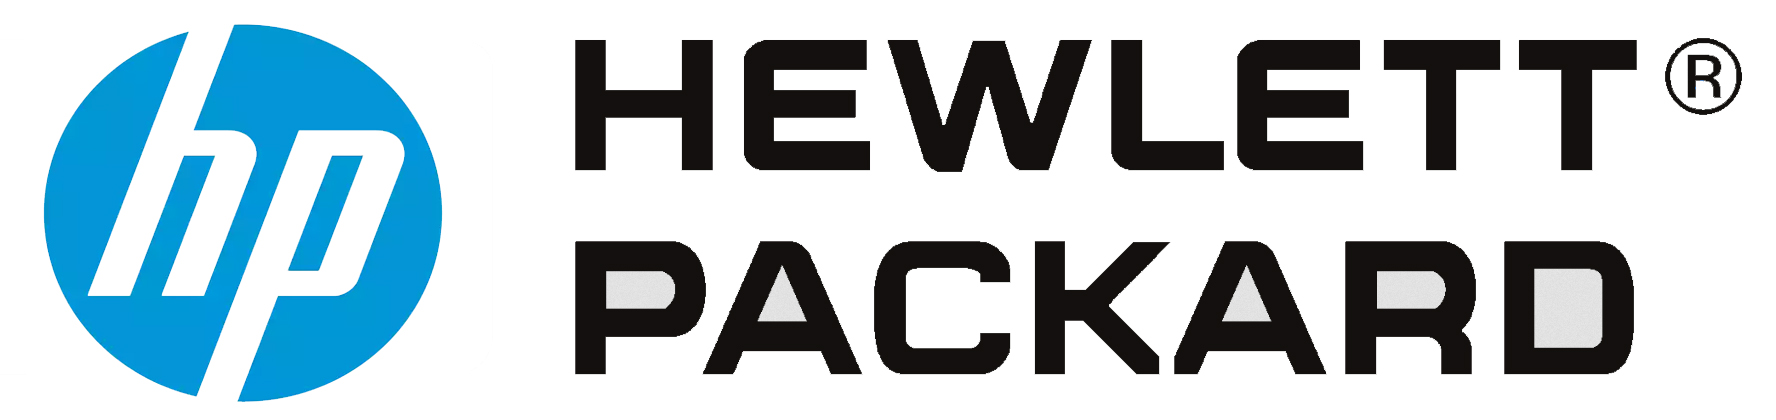 Hewlett Packard Company Logo